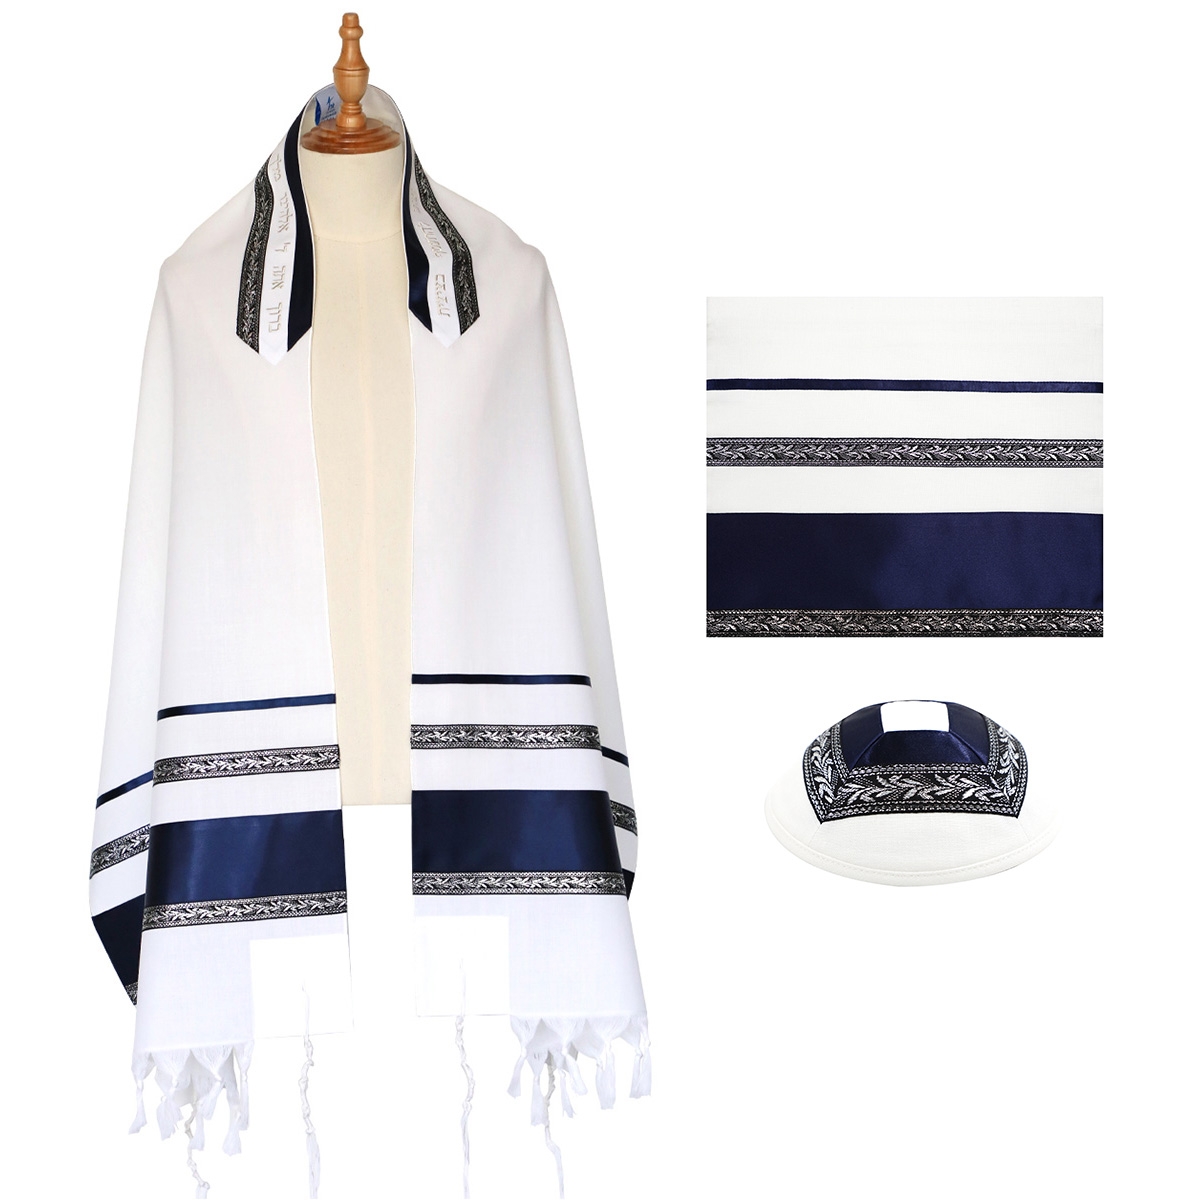 Eretz Judaica "Gur" Wool Prayer Shawl Set for Men with Blue and Silver Stripes - 1